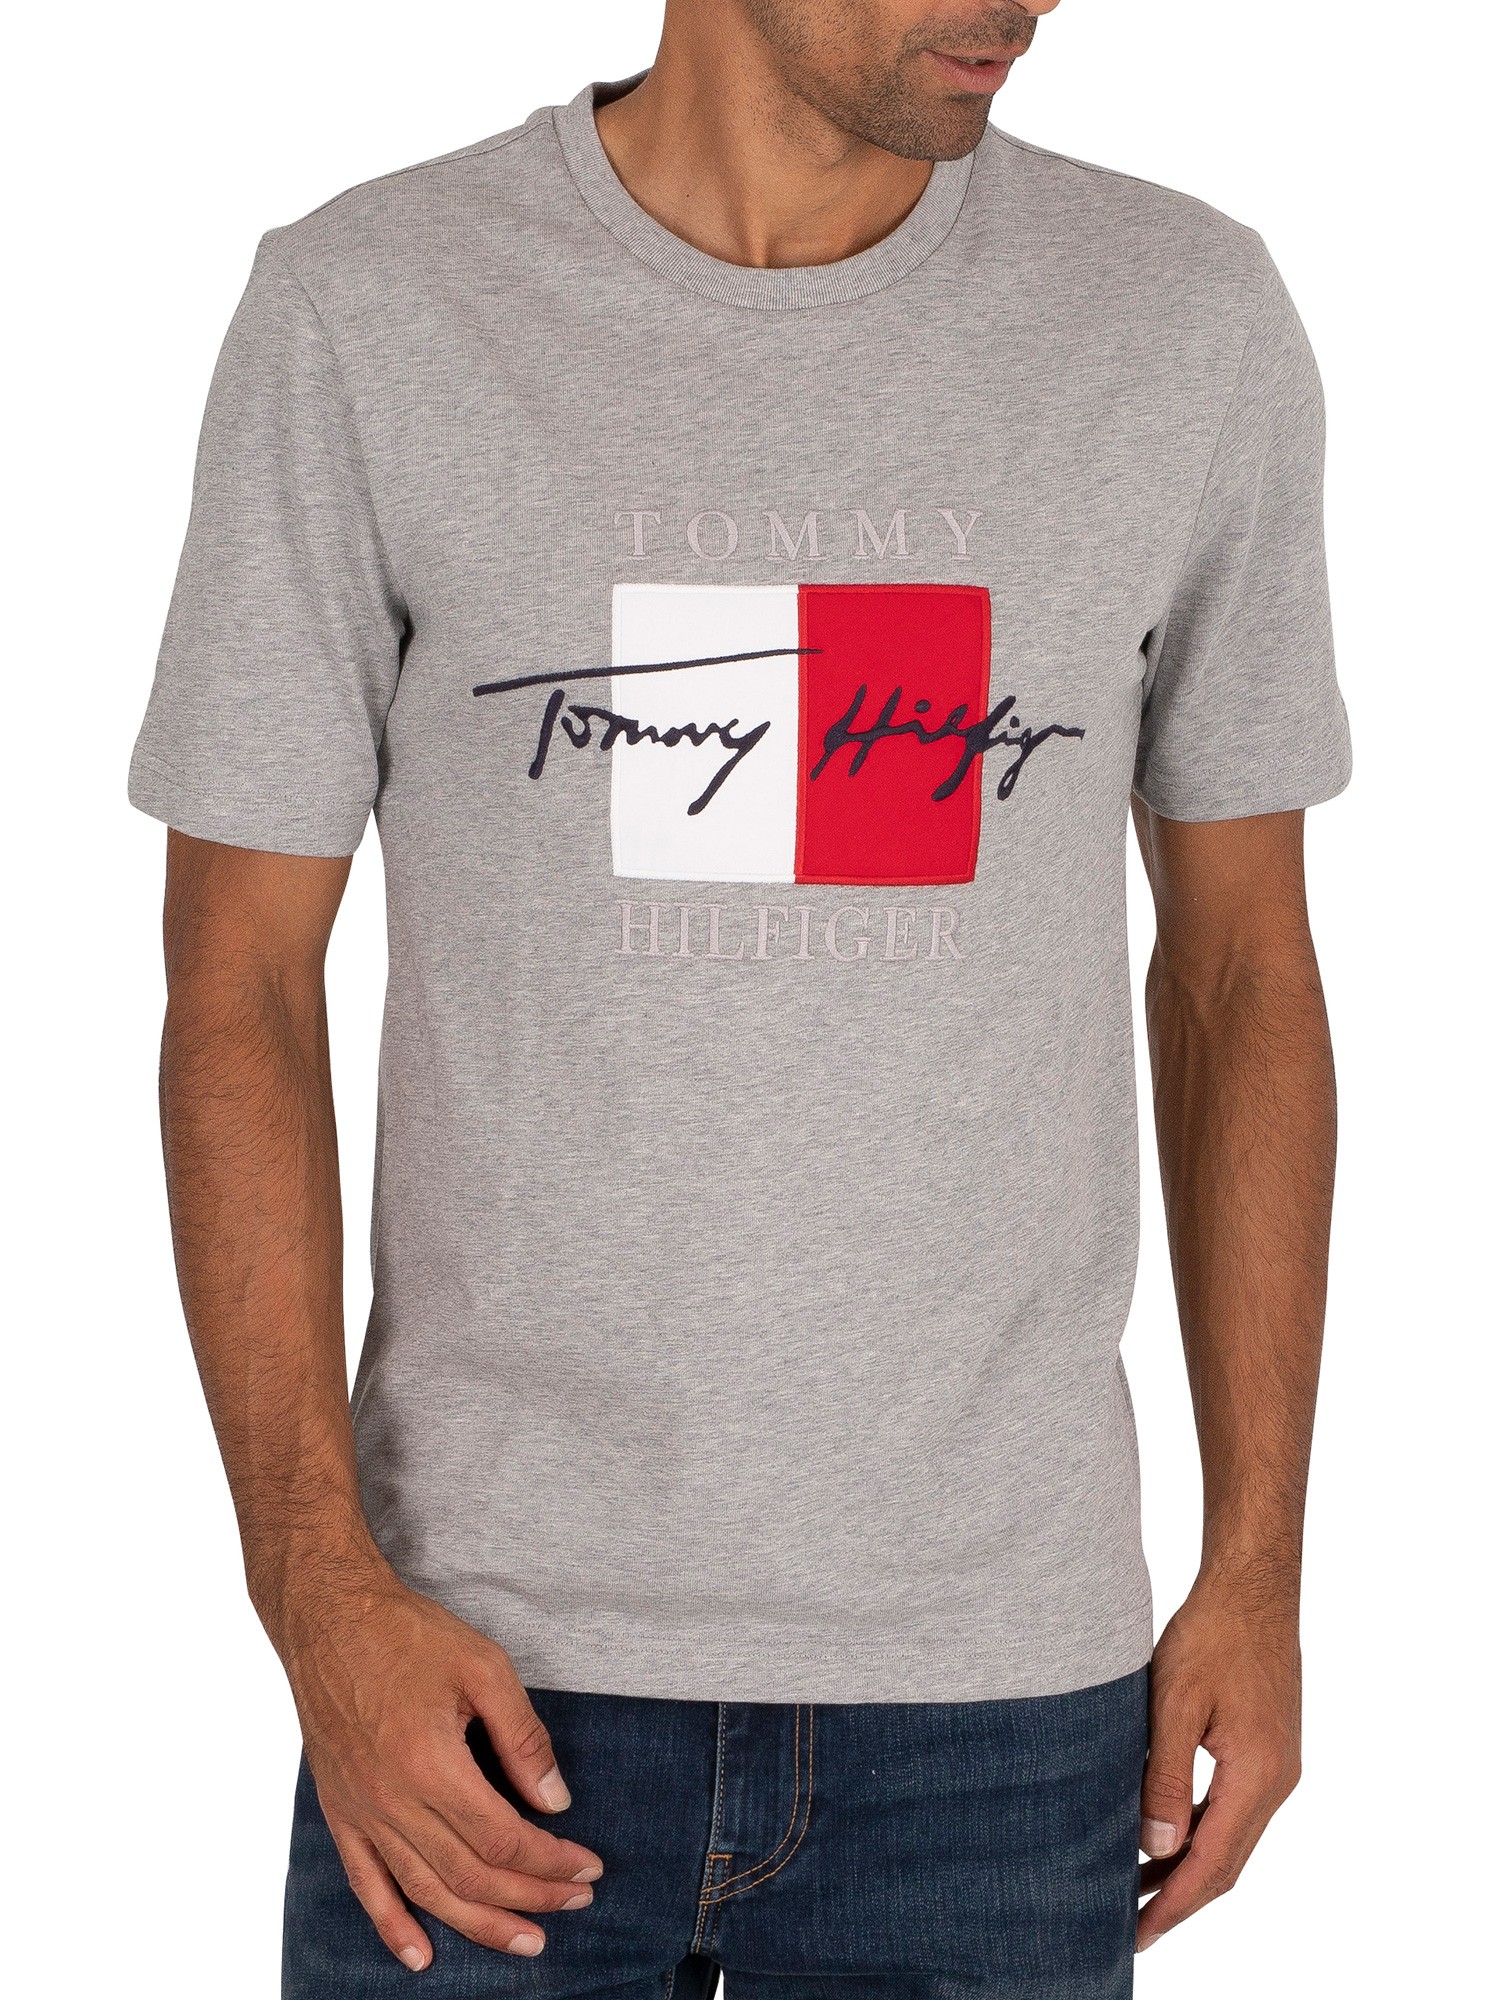 buy tommy hilfiger t shirts